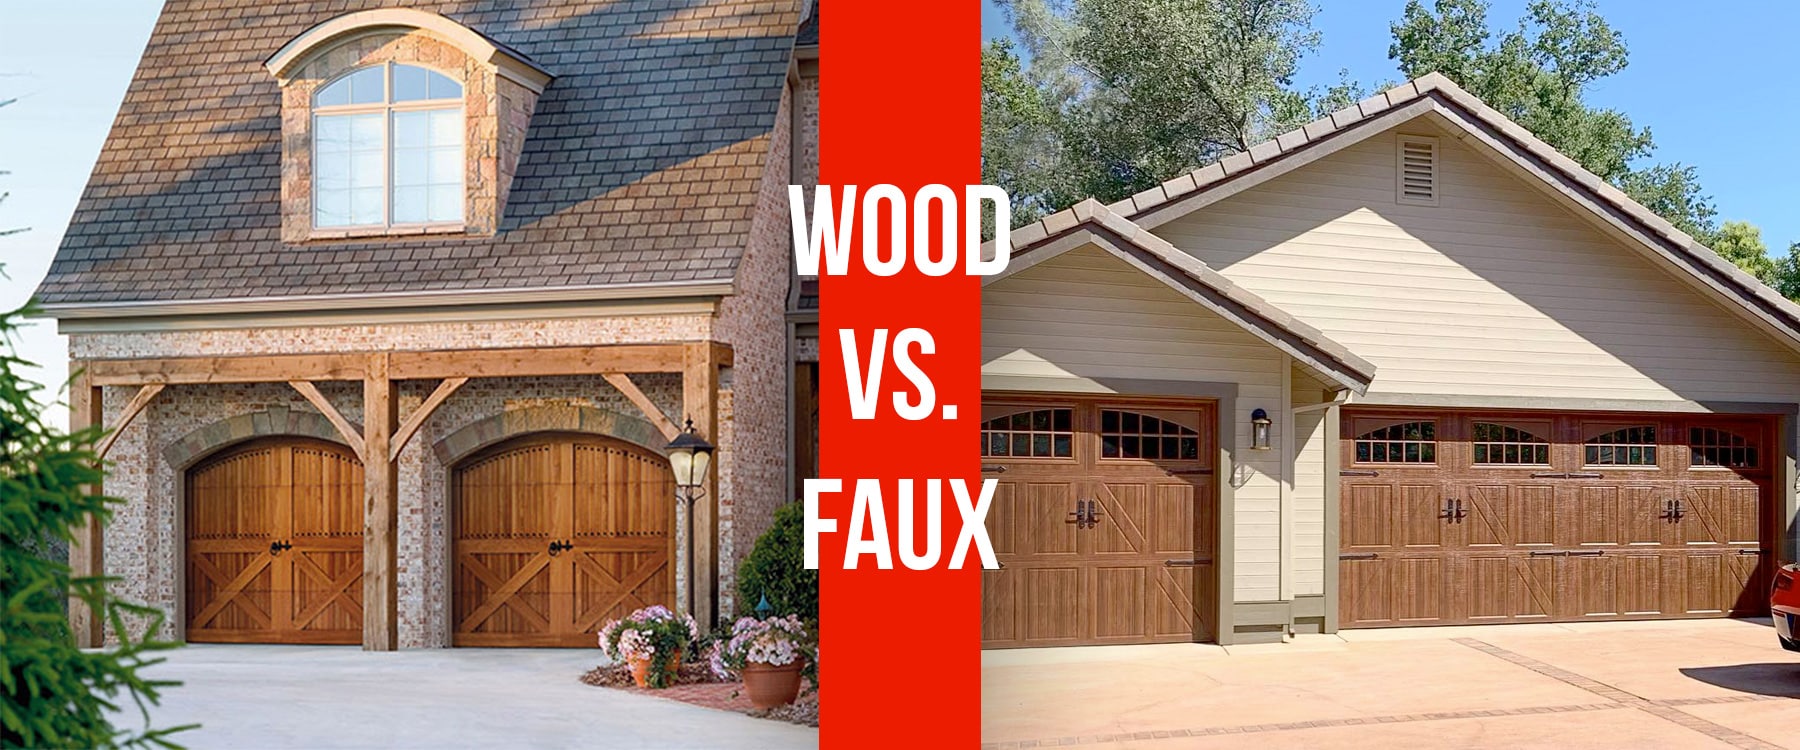 Wood vs. Faux Wood Garage Doors